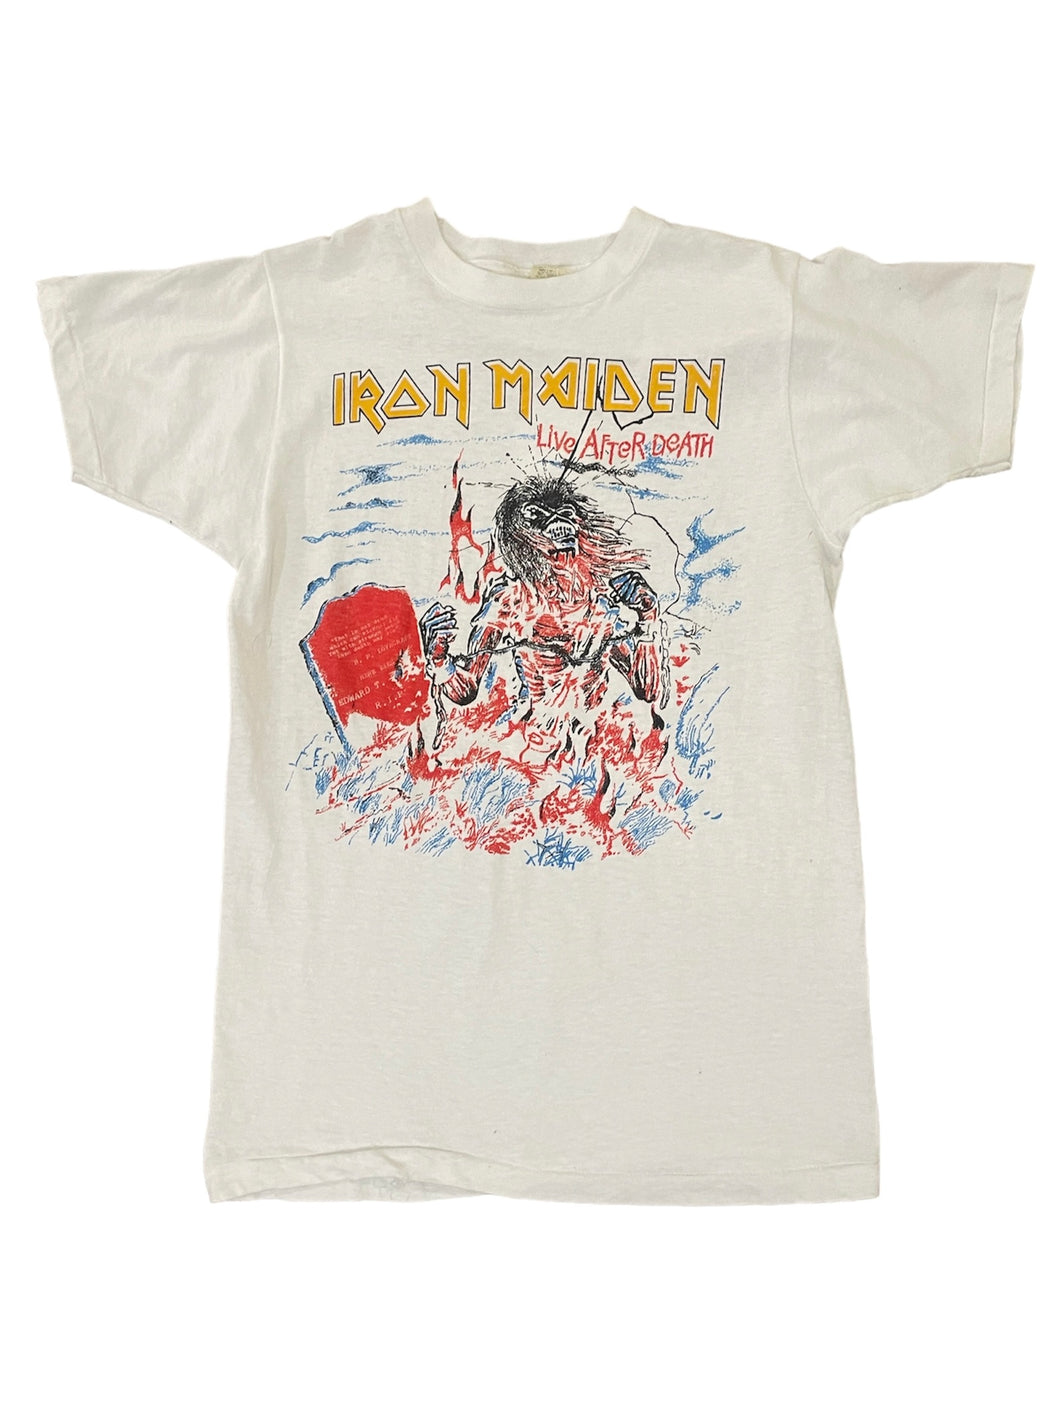 Vintage Iron Maiden Shirt